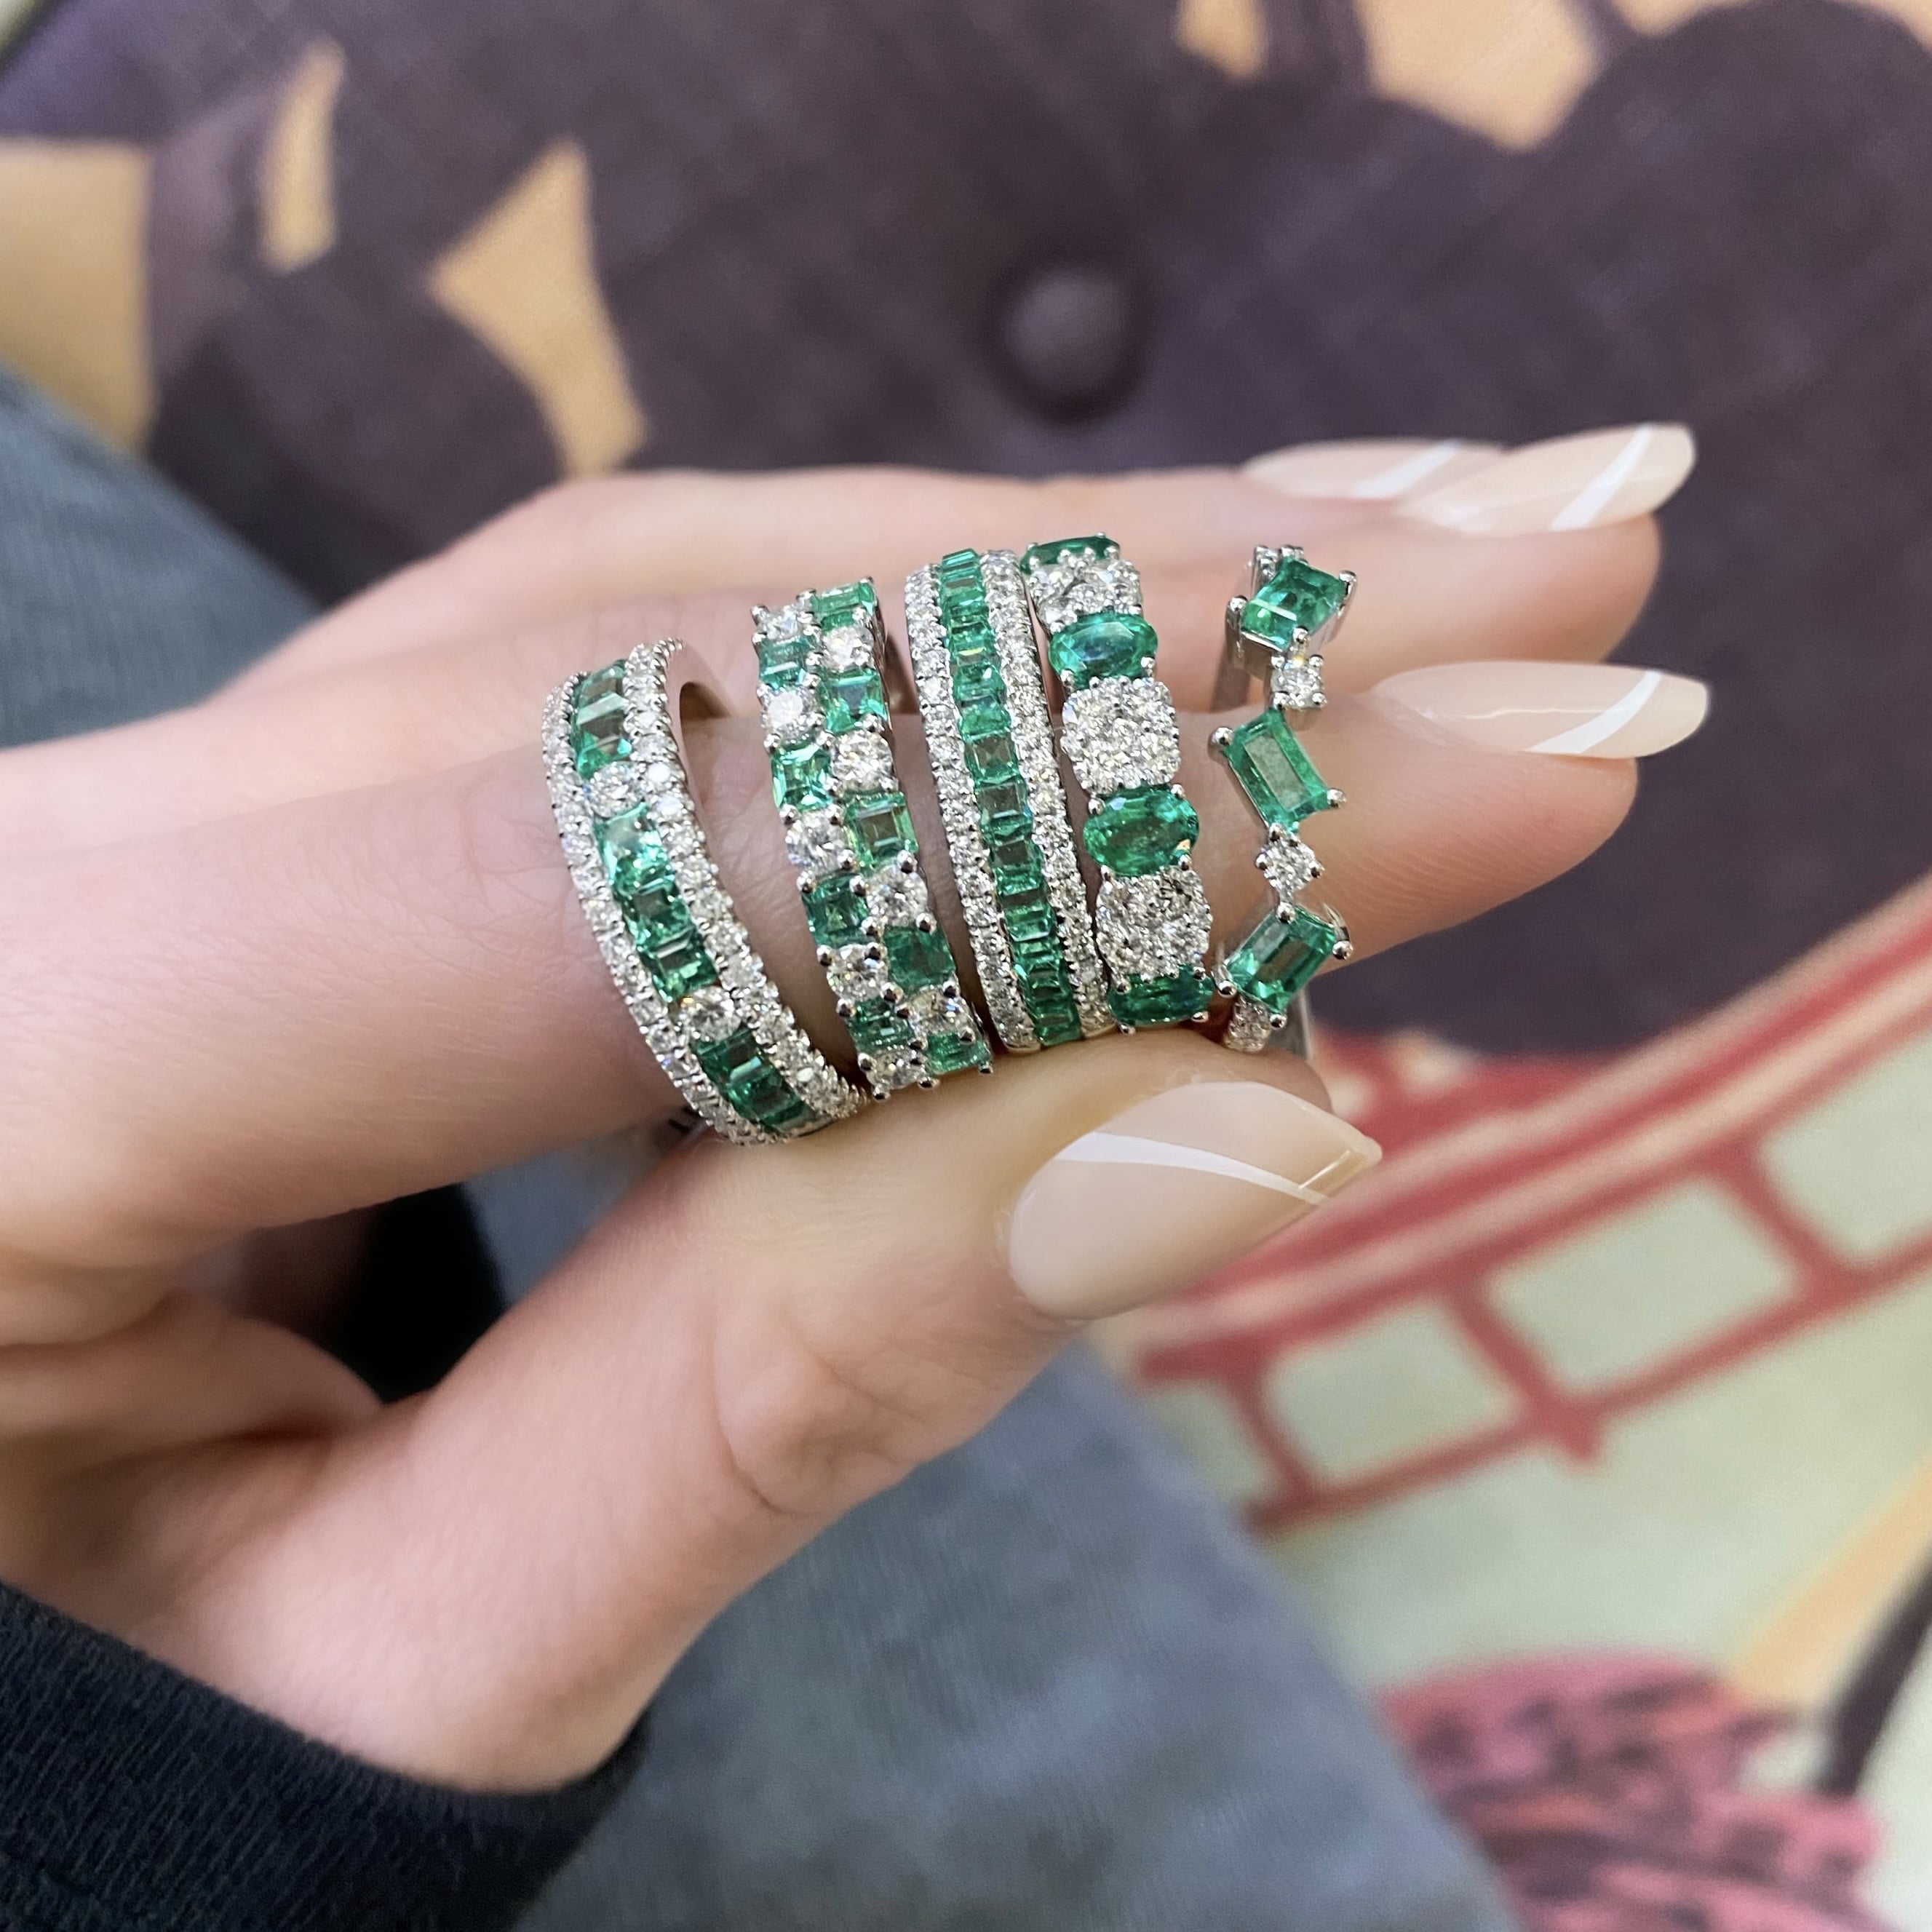 1 Carat Emerald Cut Diamond Ring | VRAI Created Diamonds